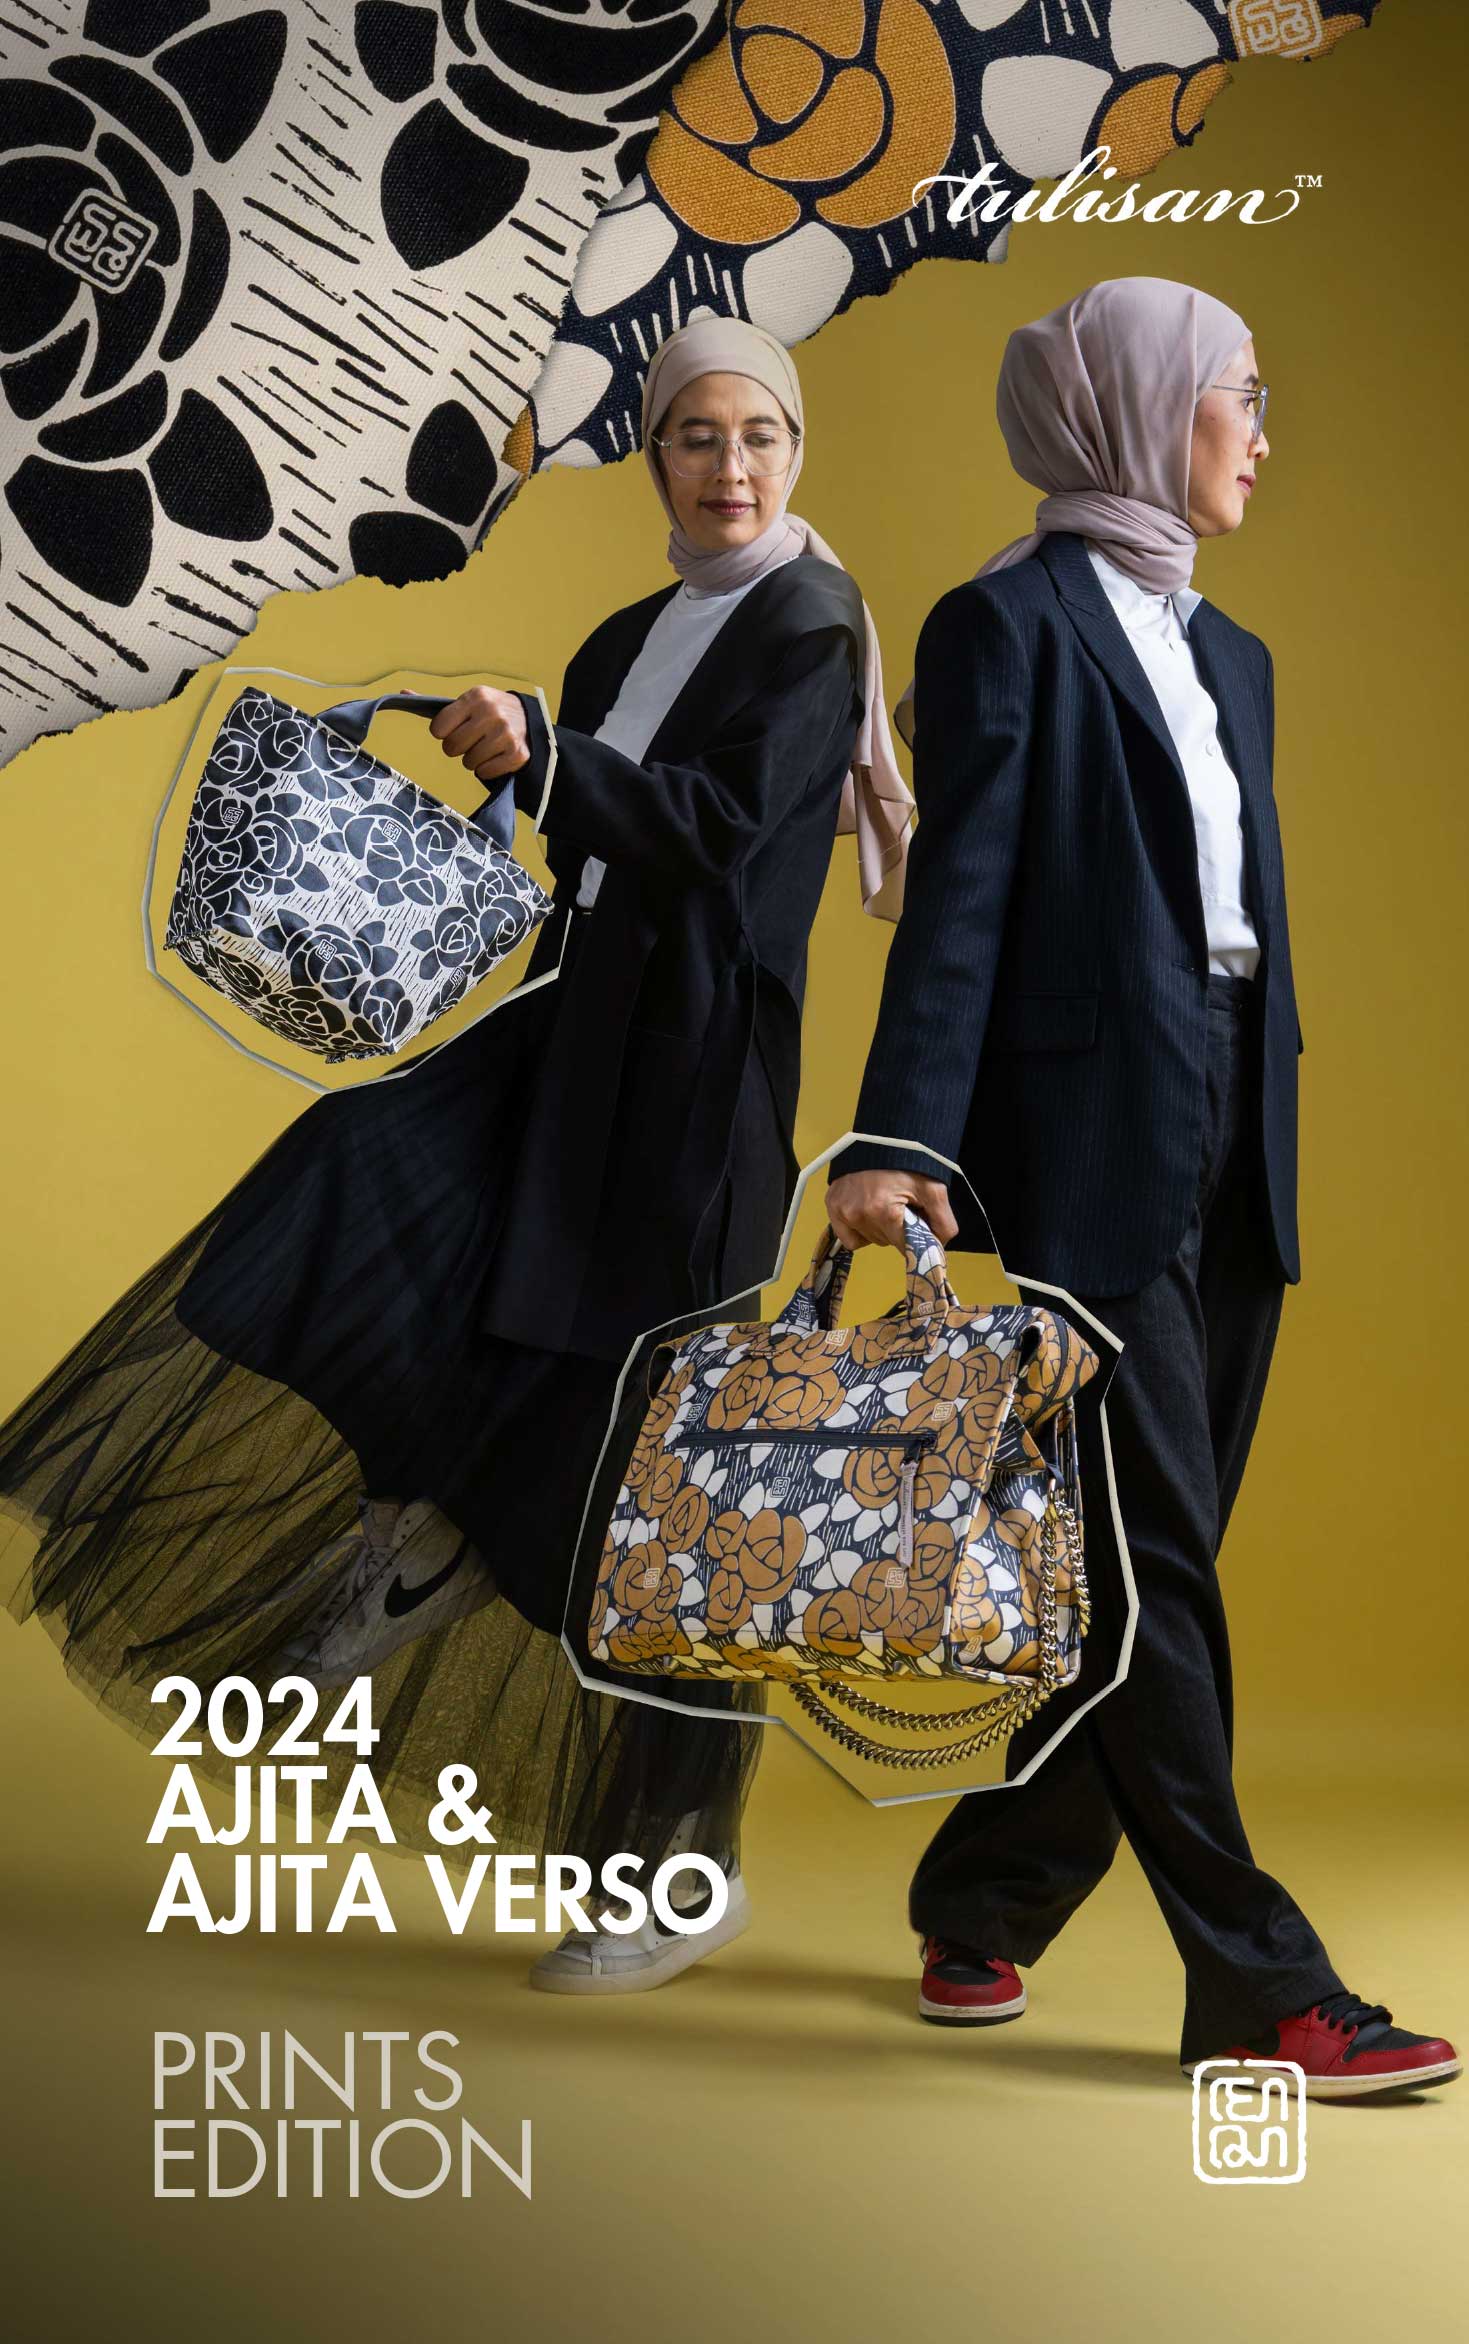 AJITA & AJITA VERSO - Prints Edition